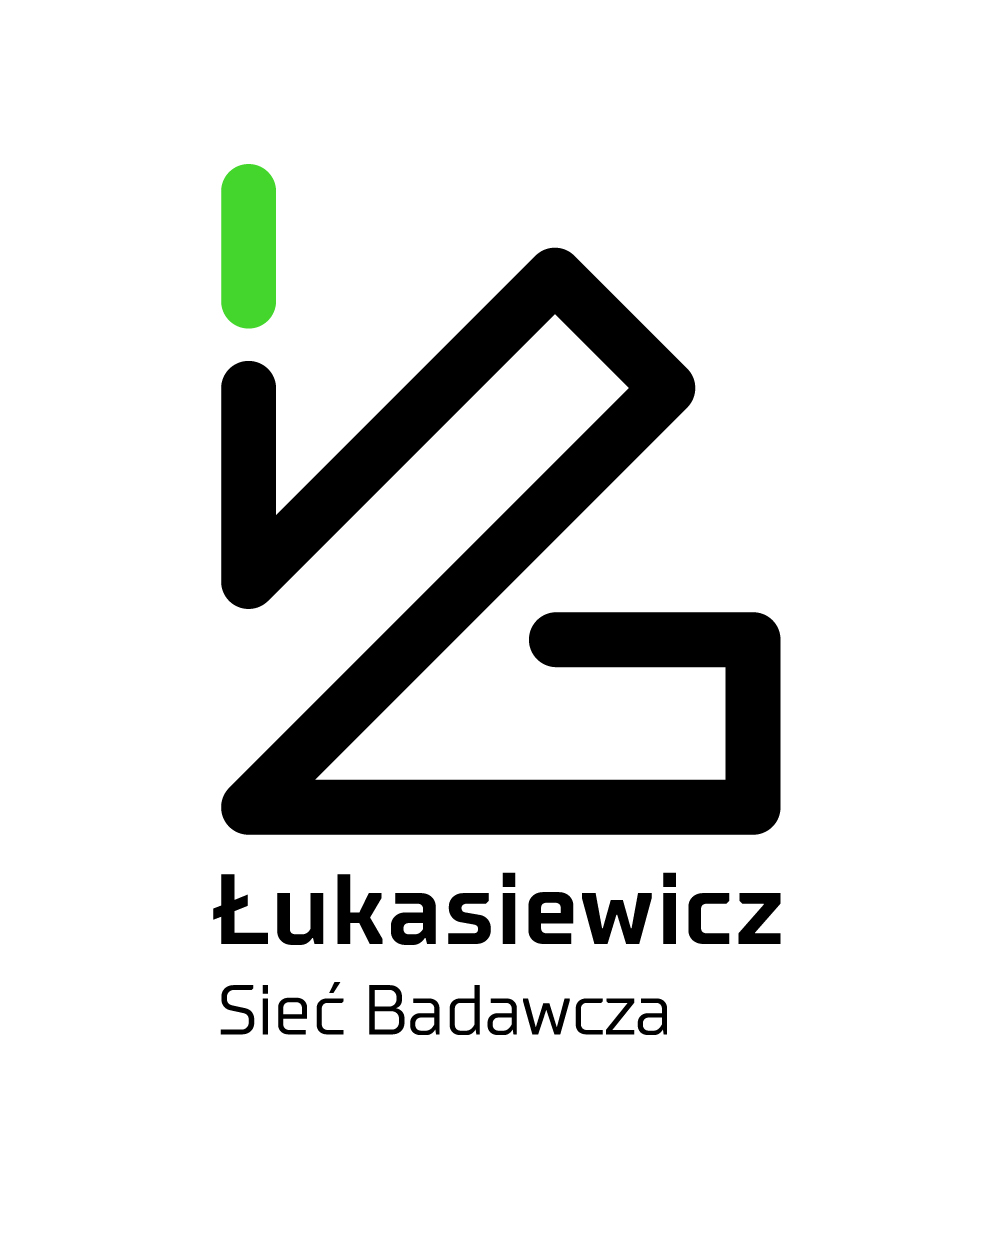 Polwax joins the Łukasiewicz Index.